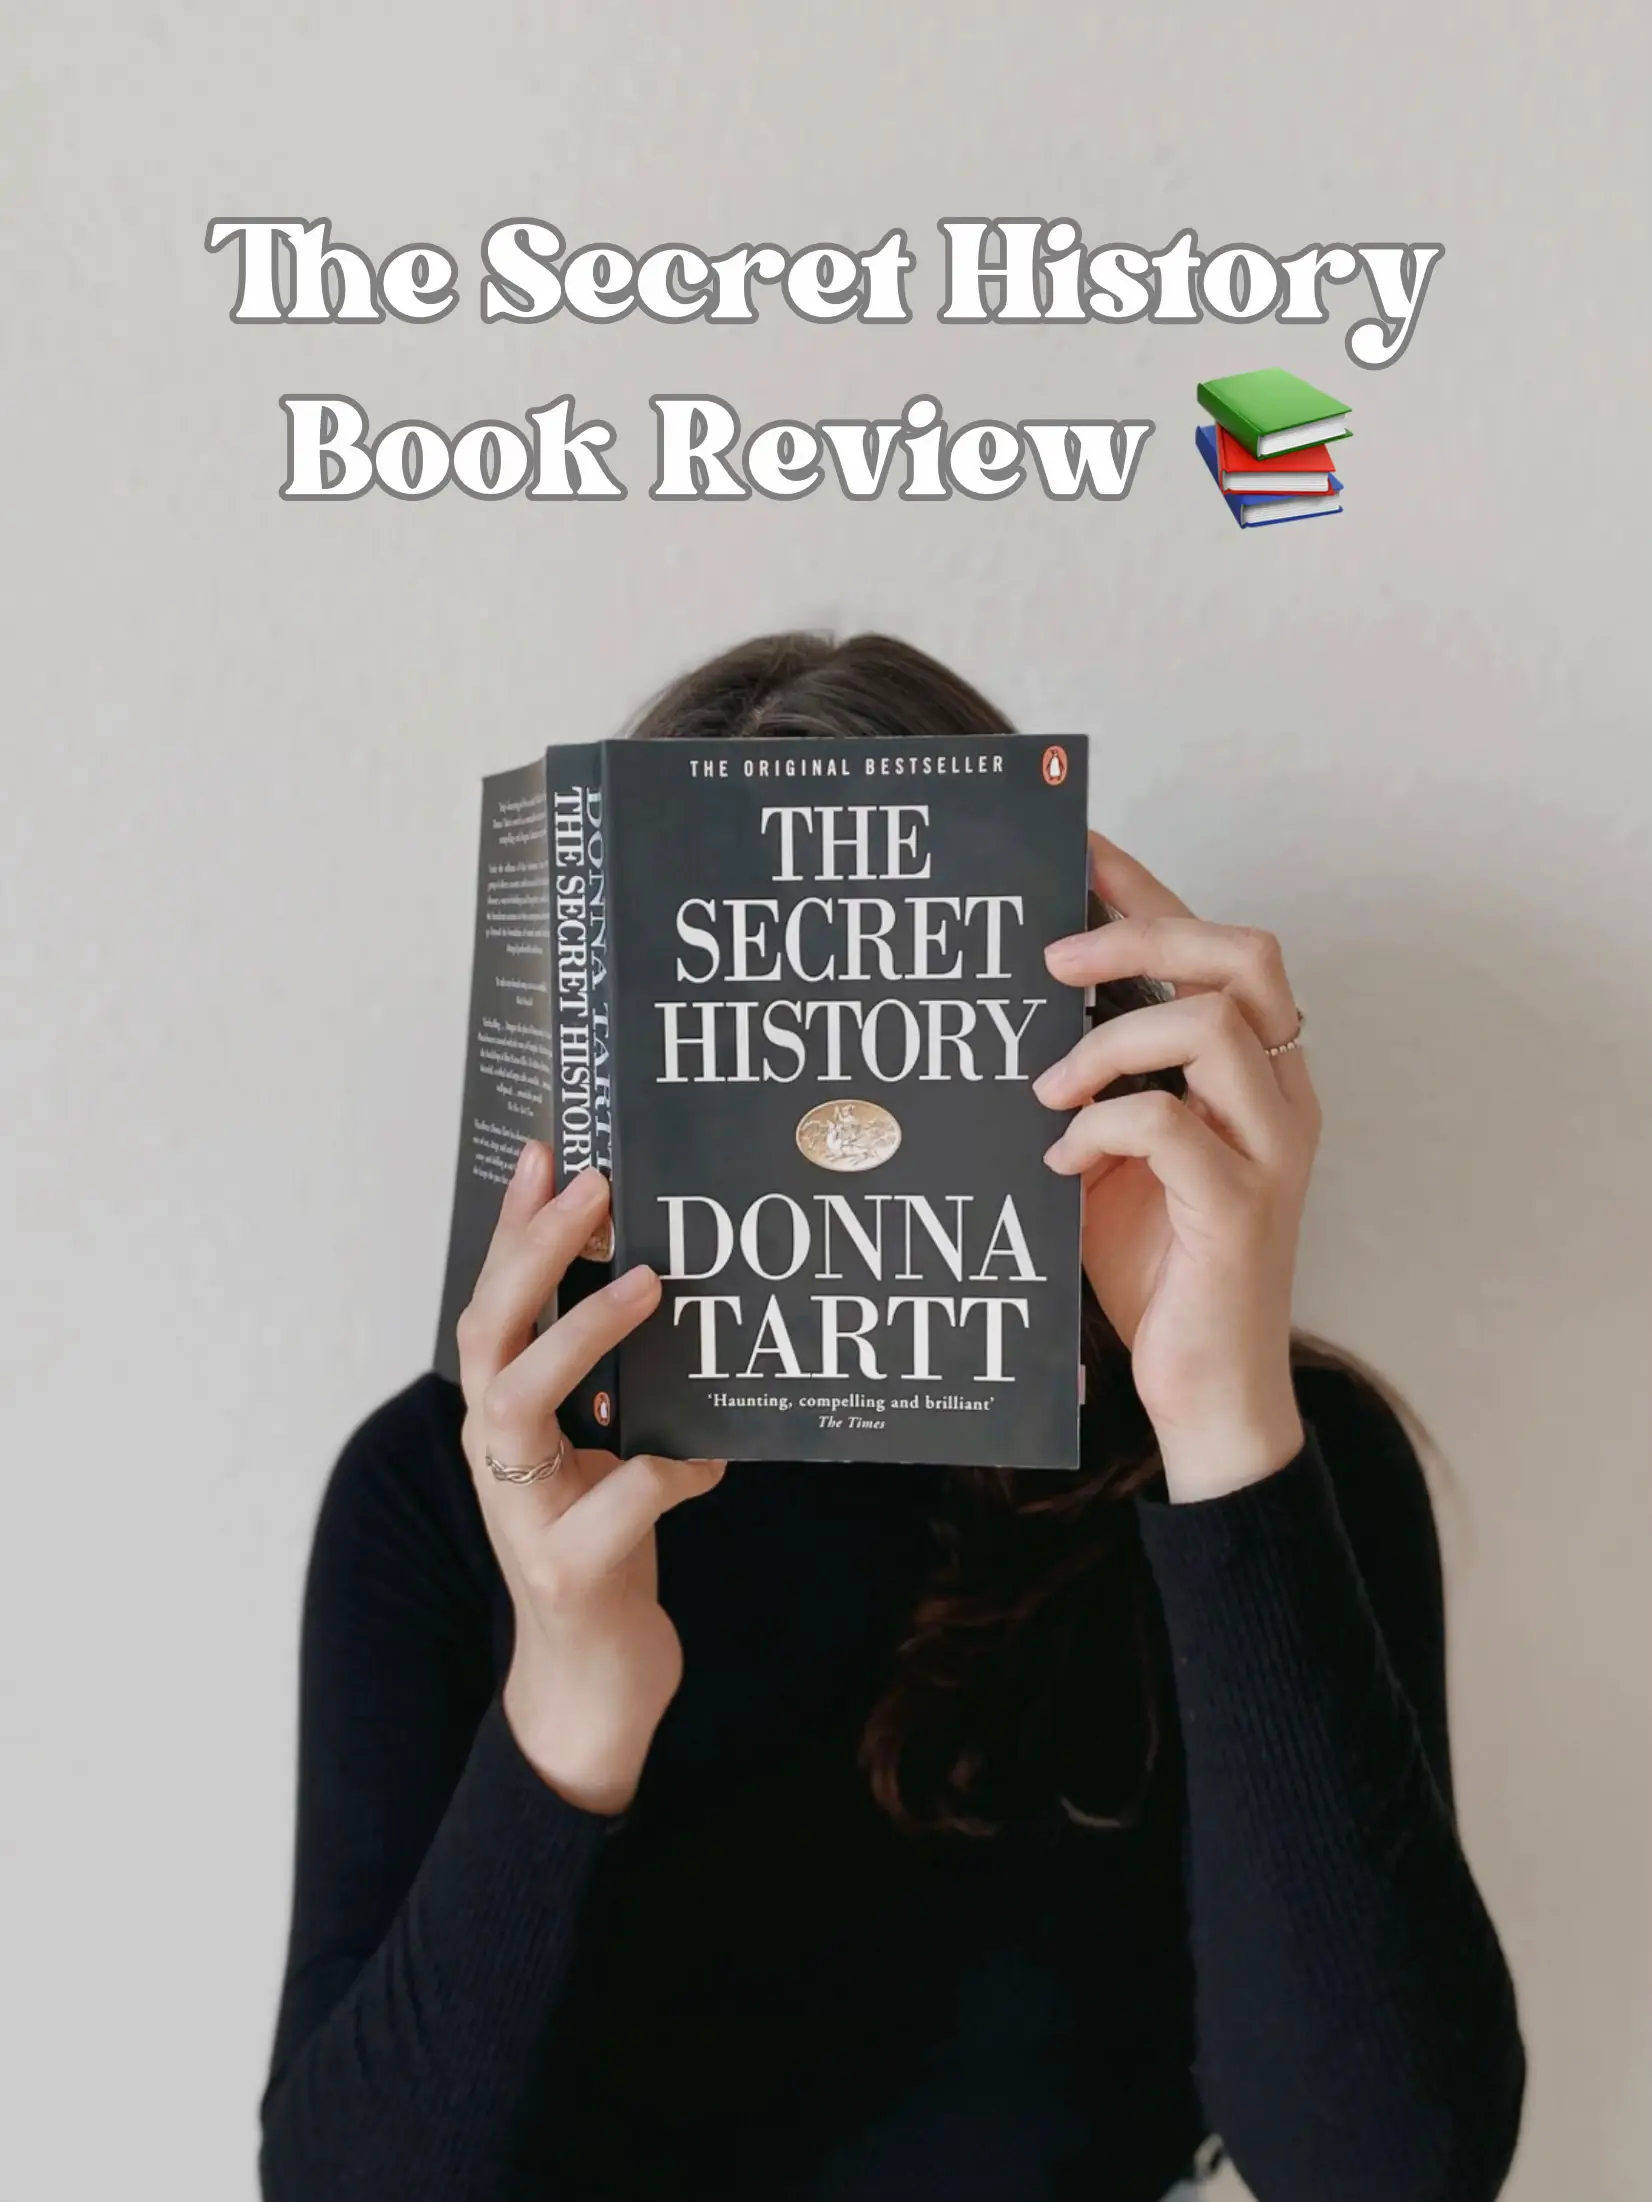 The Secret History by Donna Tartt (book review) – a dark